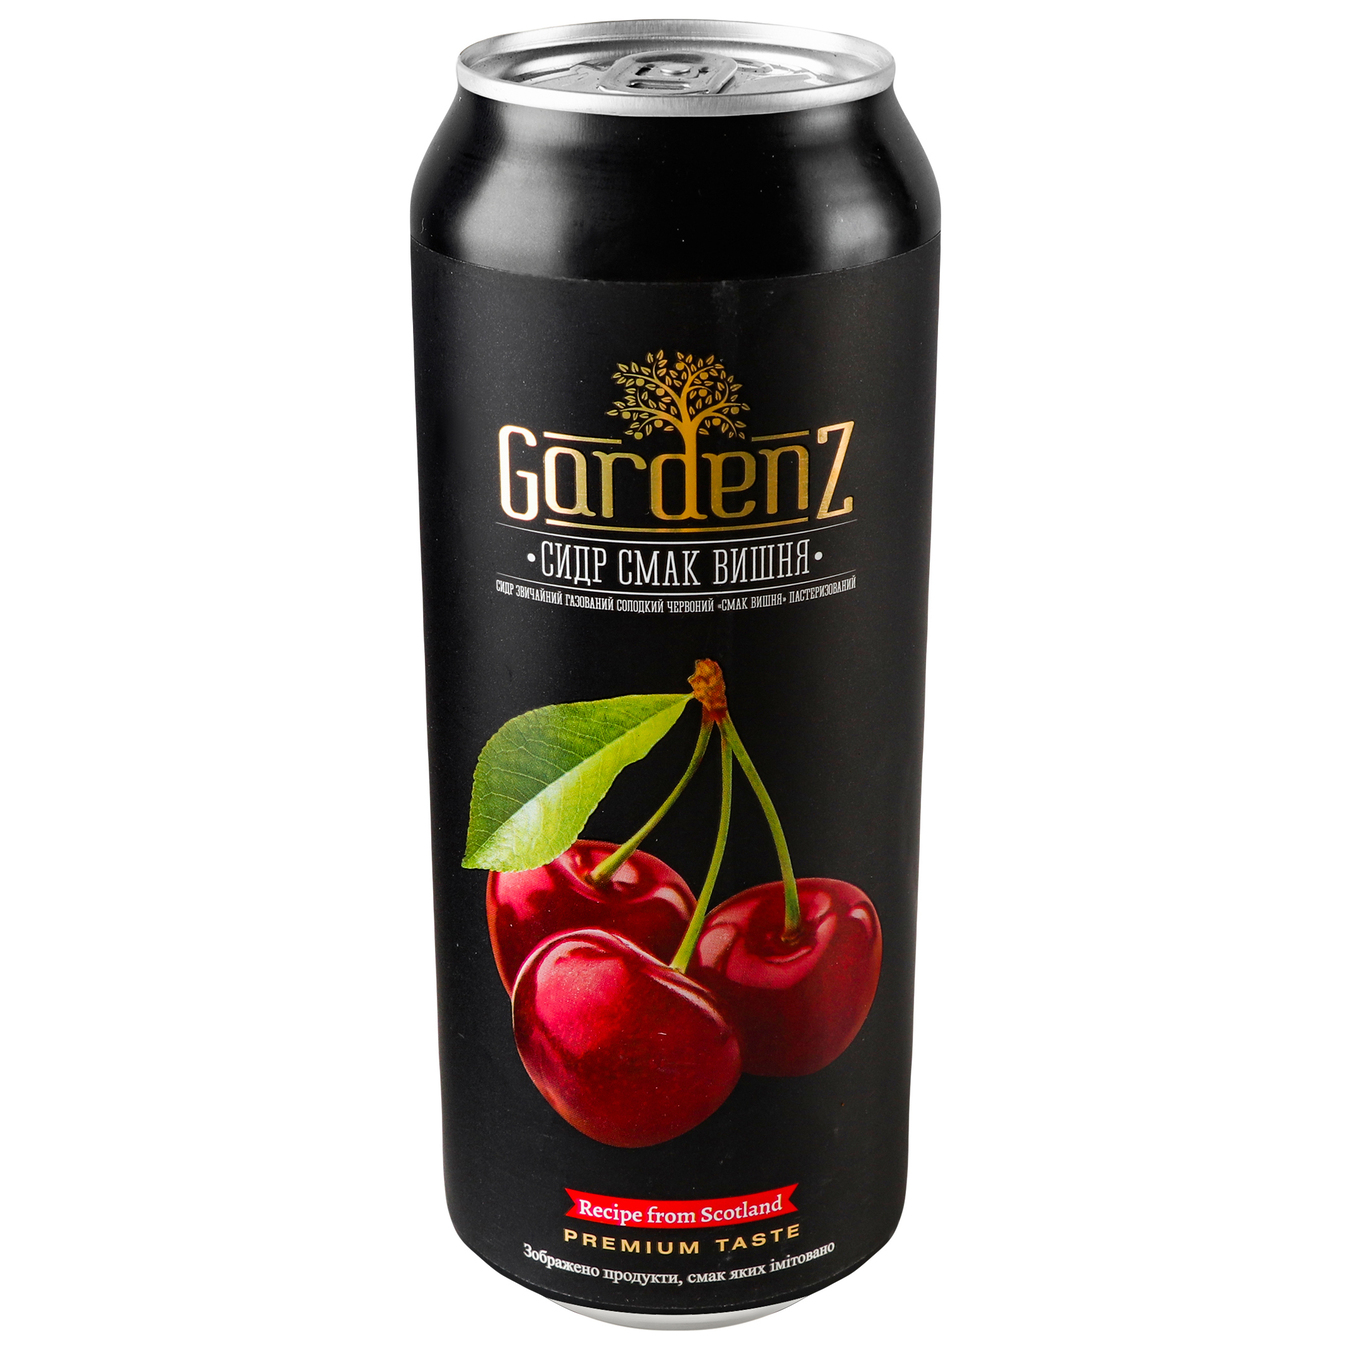 Сидр Gardenz вишня 5,4% 0,5л железная банка 2